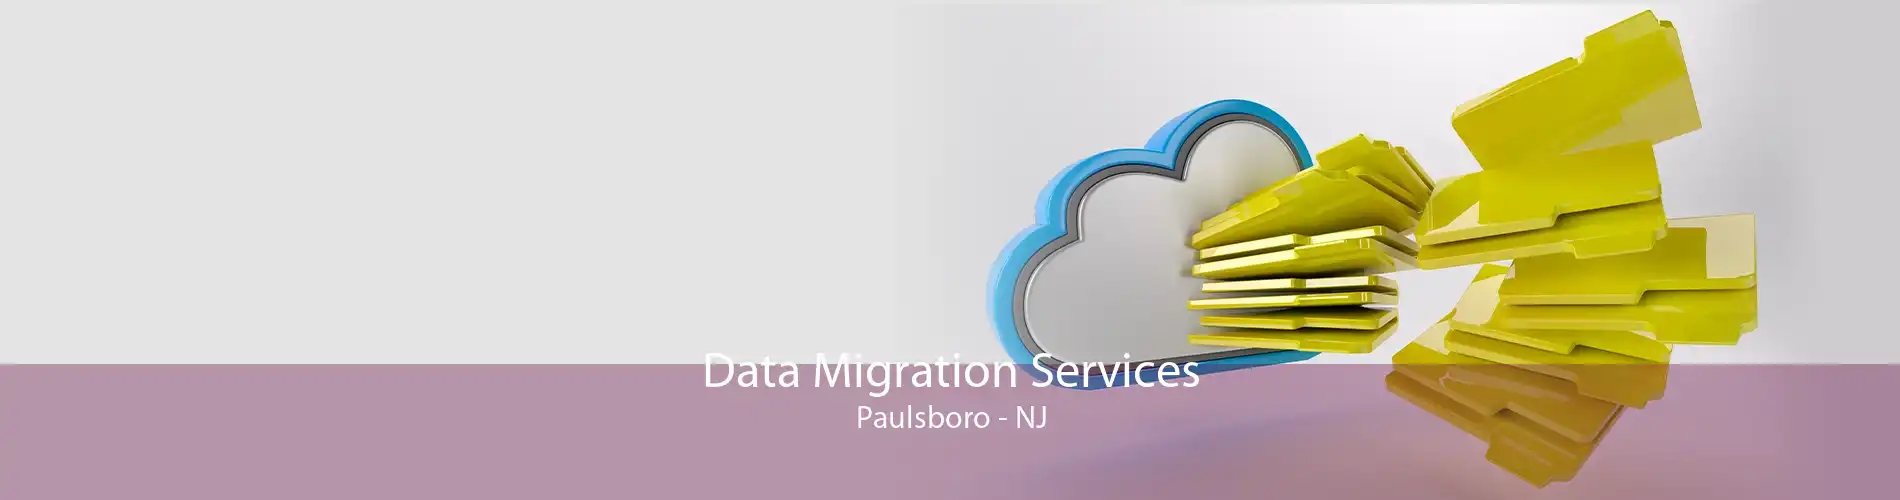 Data Migration Services Paulsboro - NJ